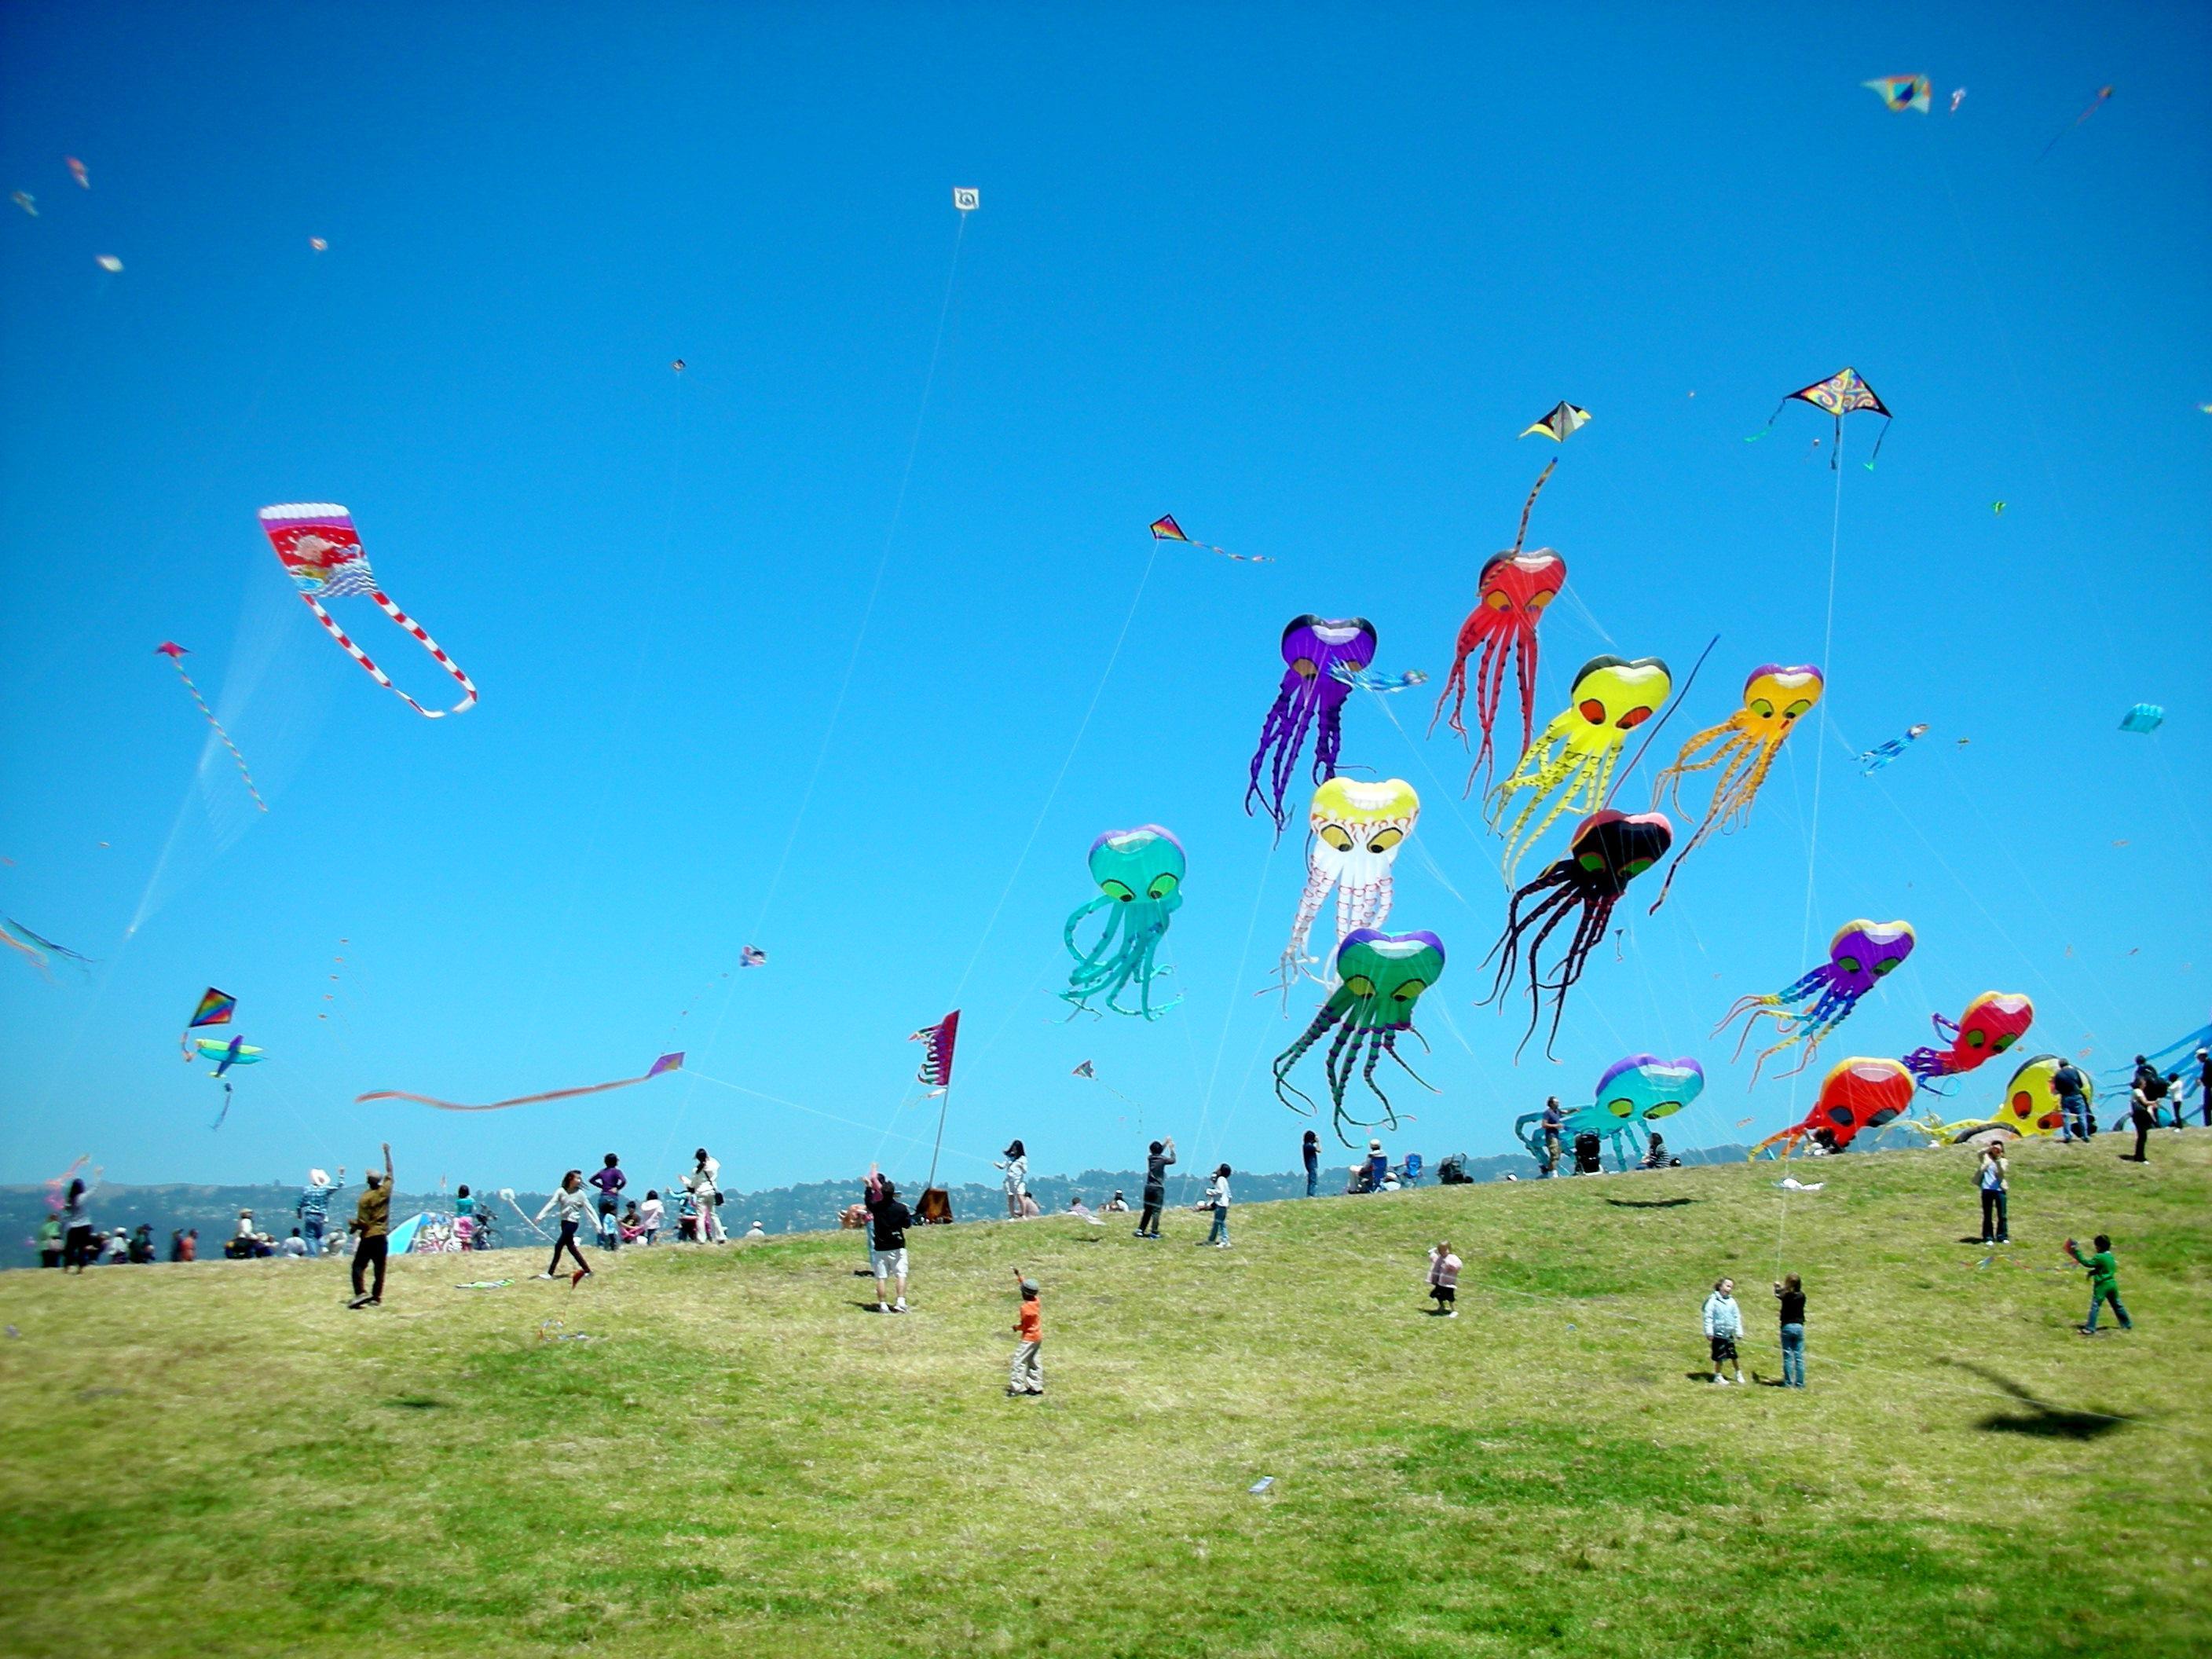 Wallpapers kite flying